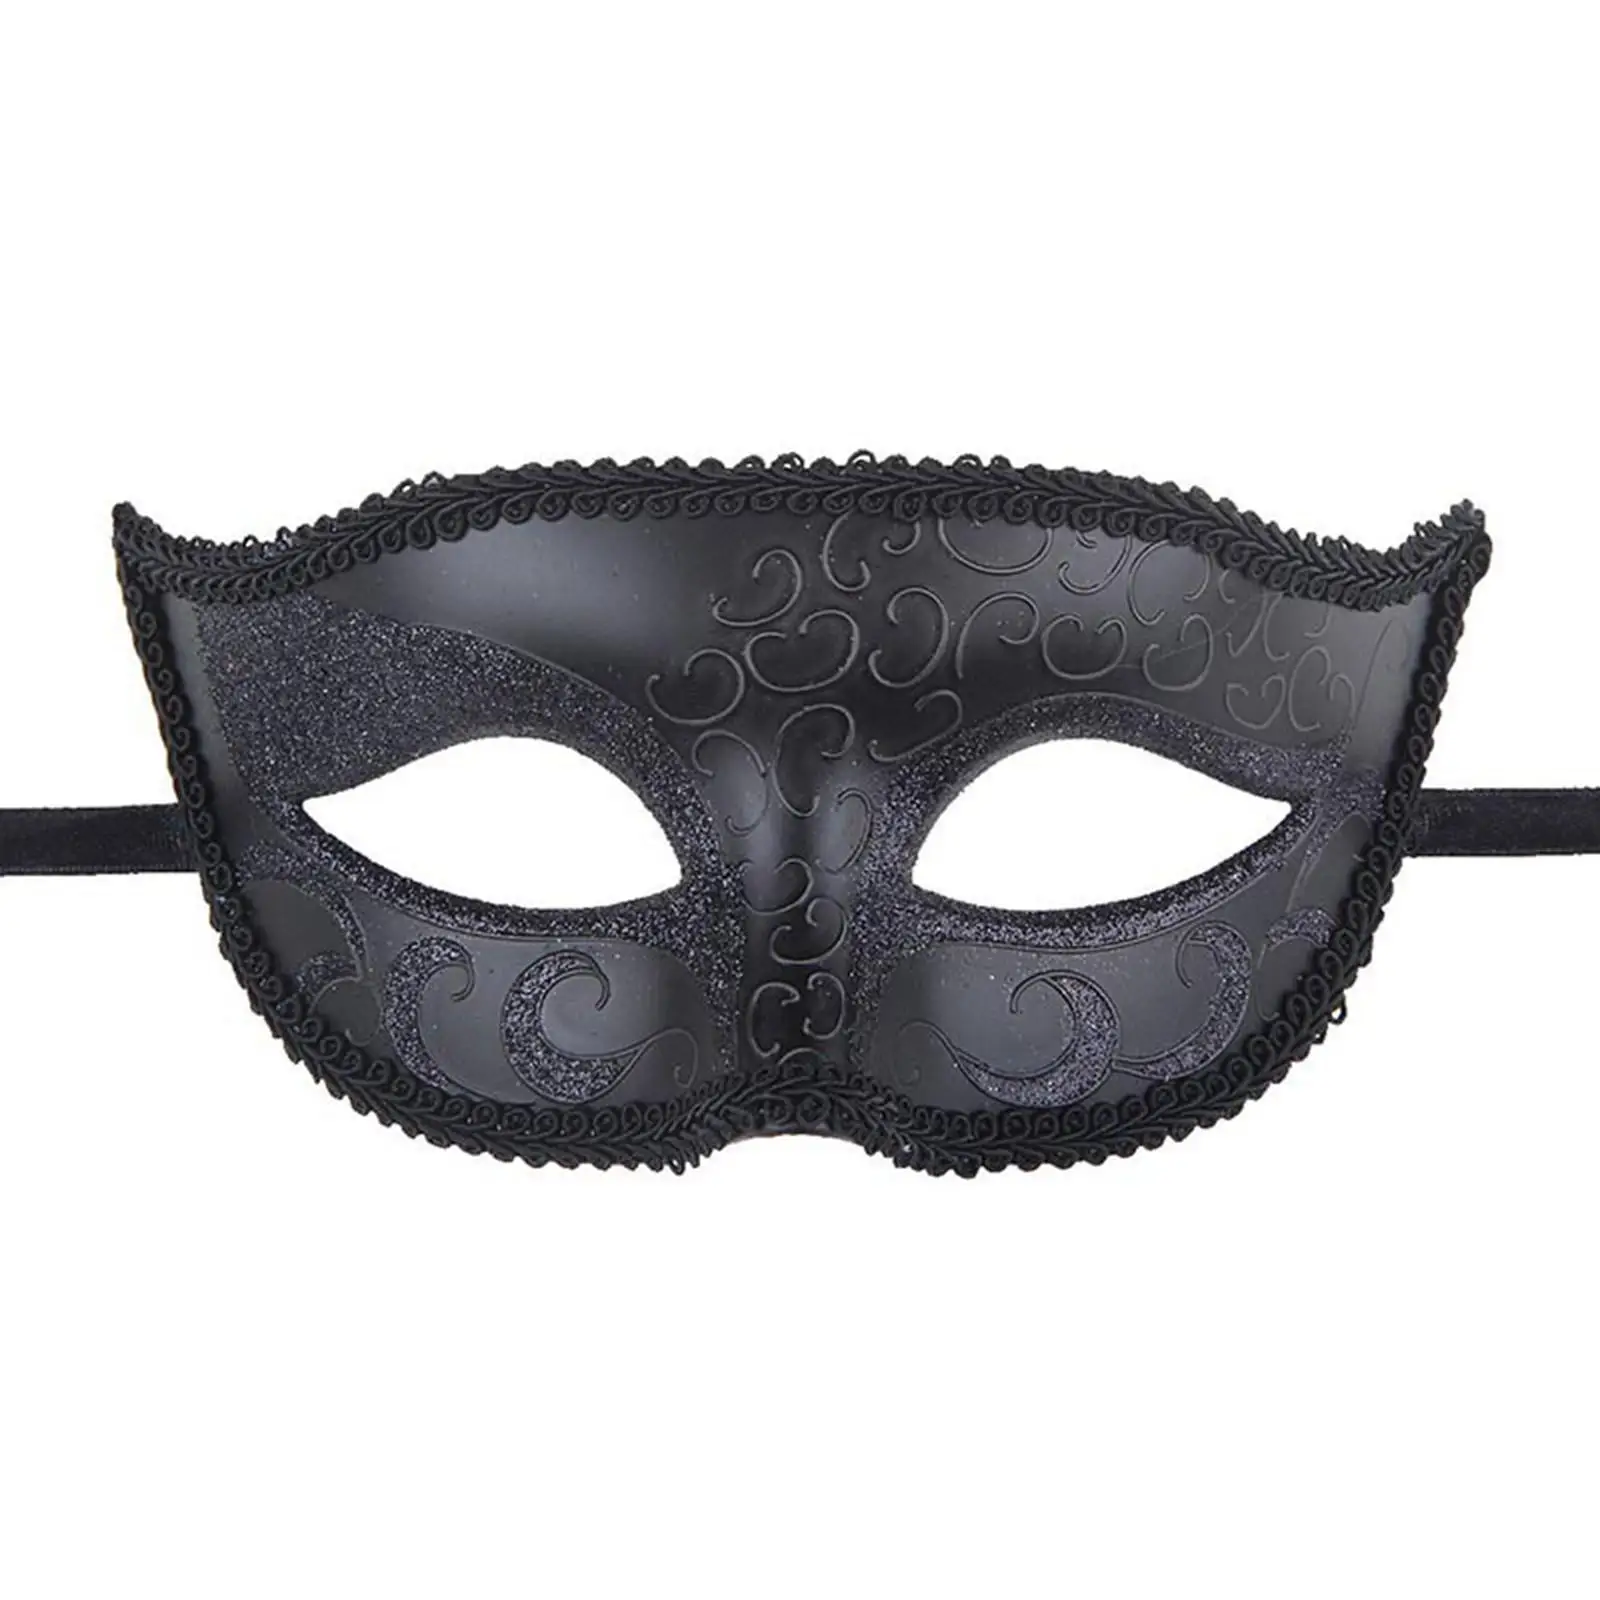 Fox Half Face Mask Cosplay Costume Masquerade Animal Masks for Festivals